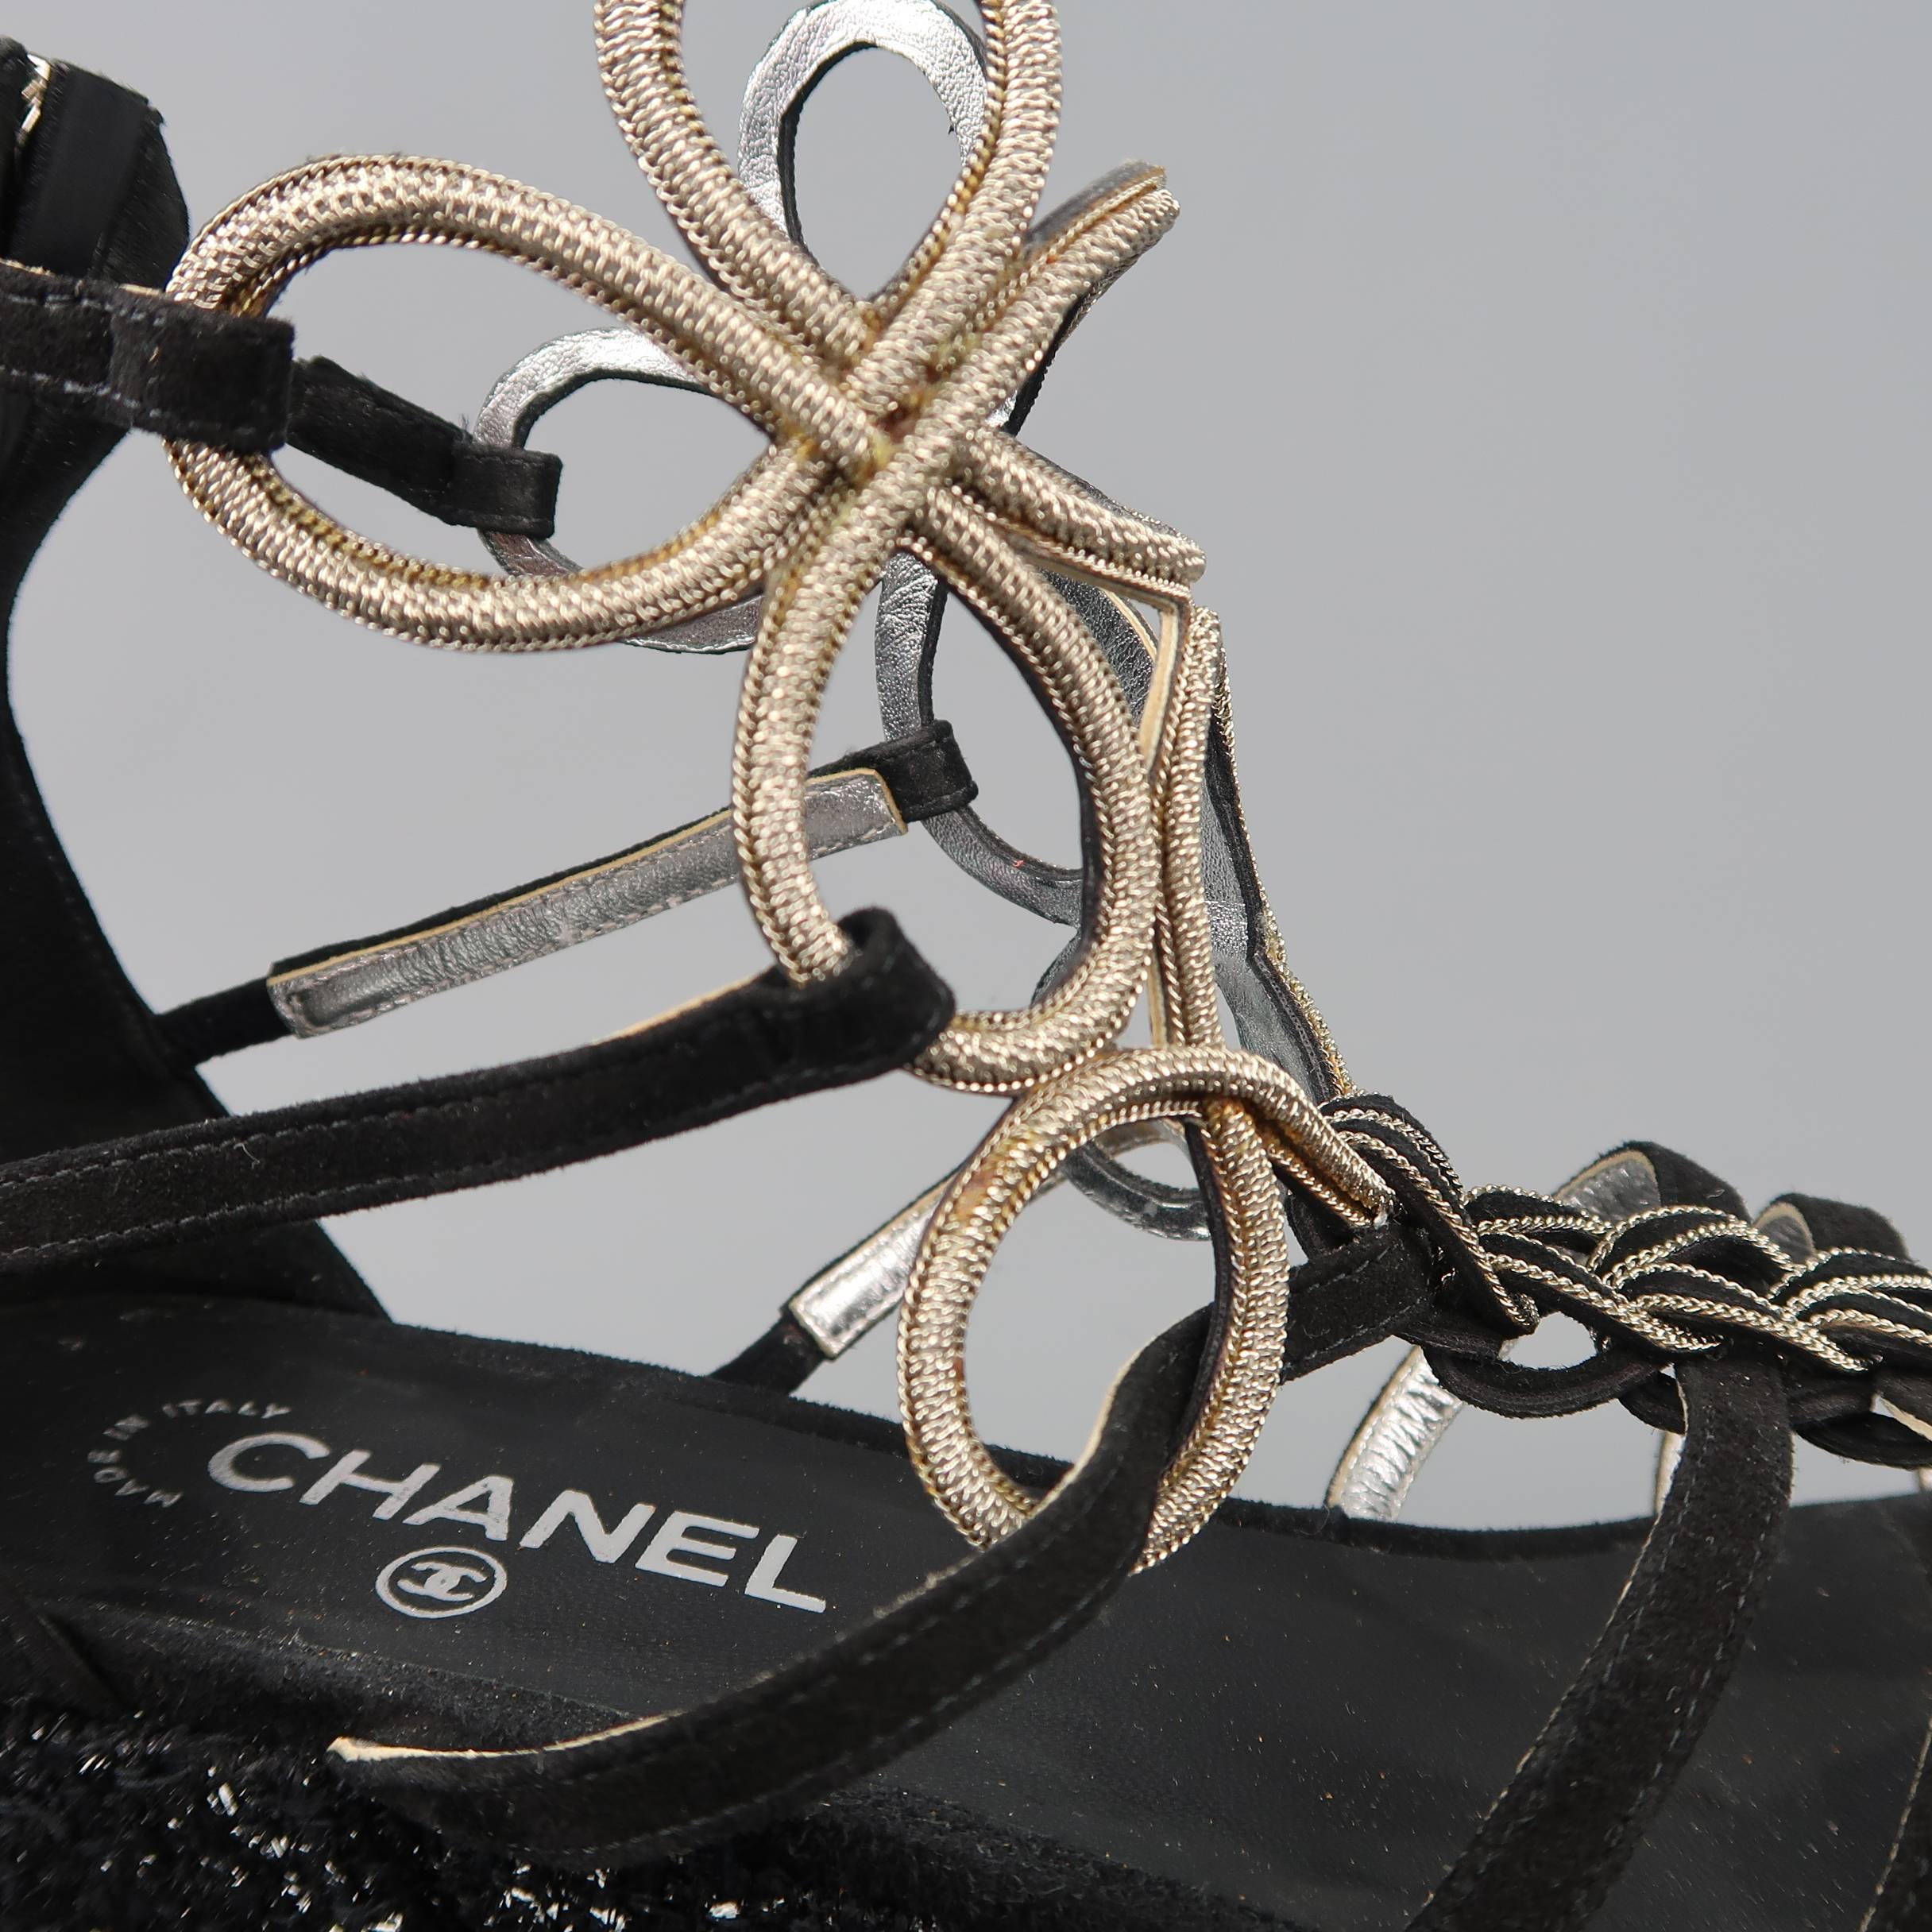 Women's Chanel Size 10 Black Suede and Metal Gladiator Platform Wedge Pump Sandals 